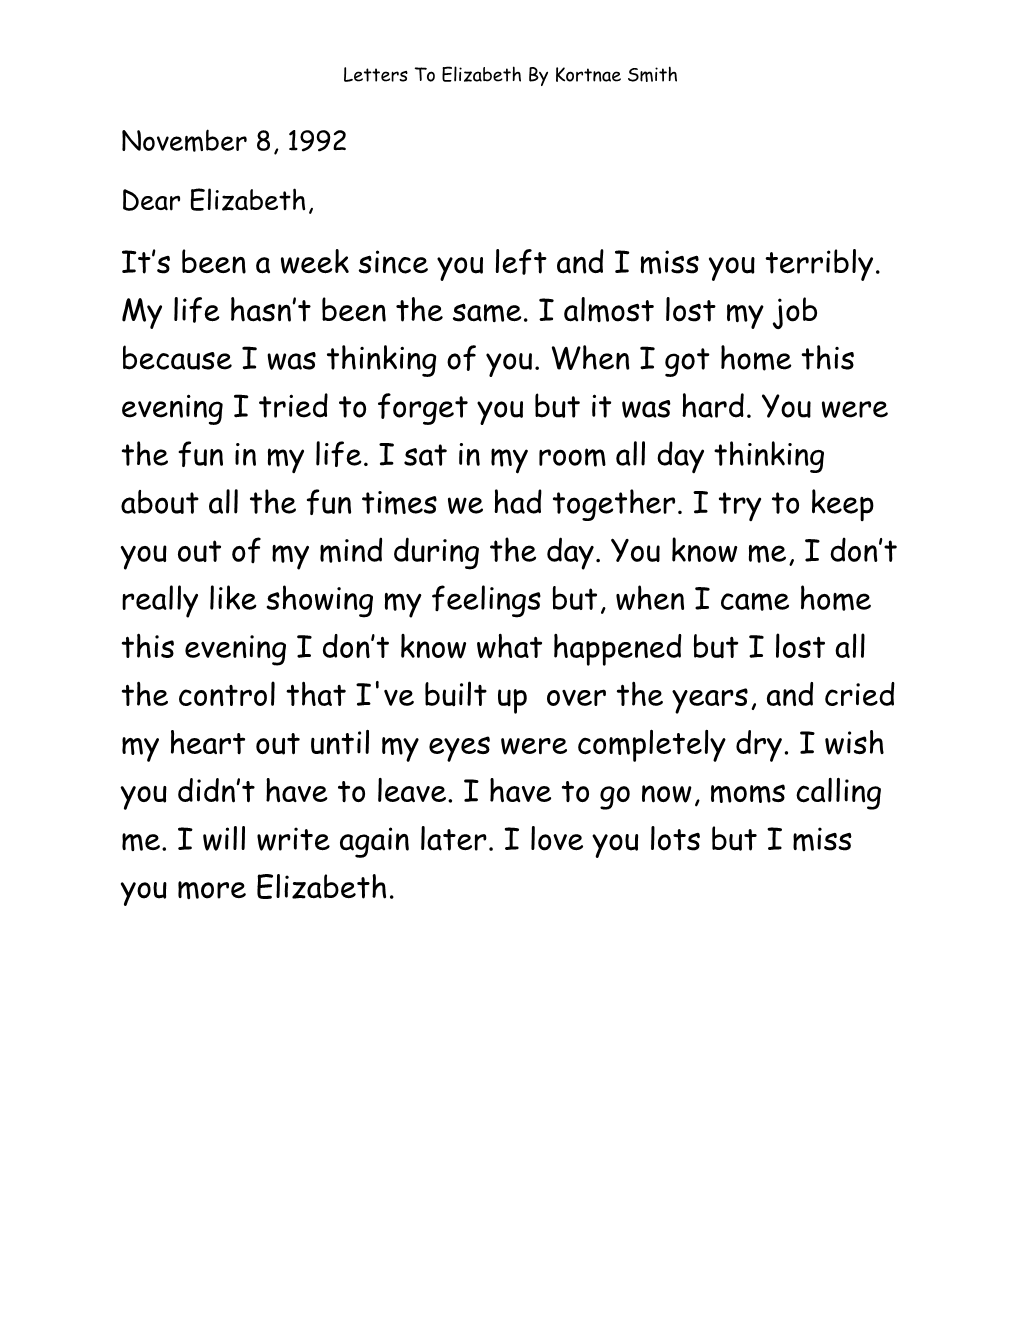 Letters to Elizabeth by Kortnae Smith